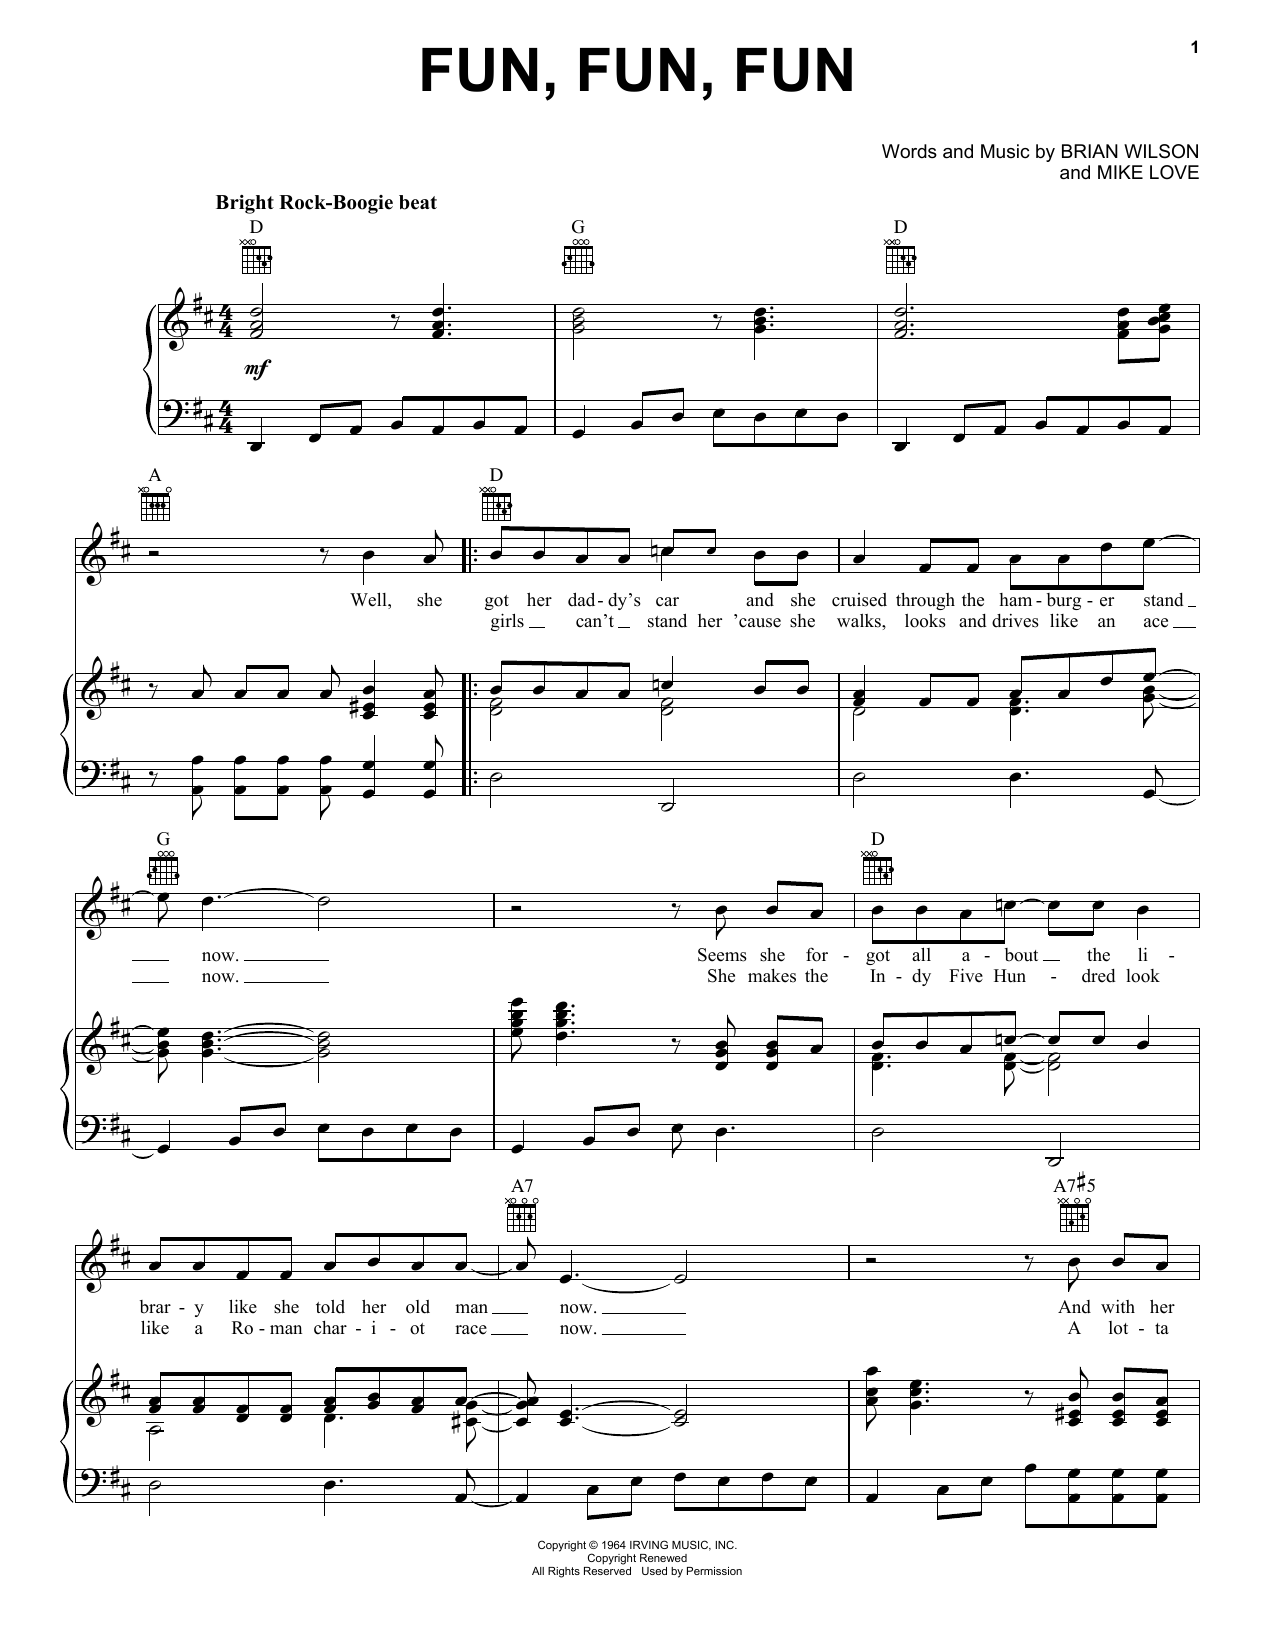 Download The Beach Boys Fun, Fun, Fun Sheet Music and learn how to play Bass Guitar Tab PDF digital score in minutes